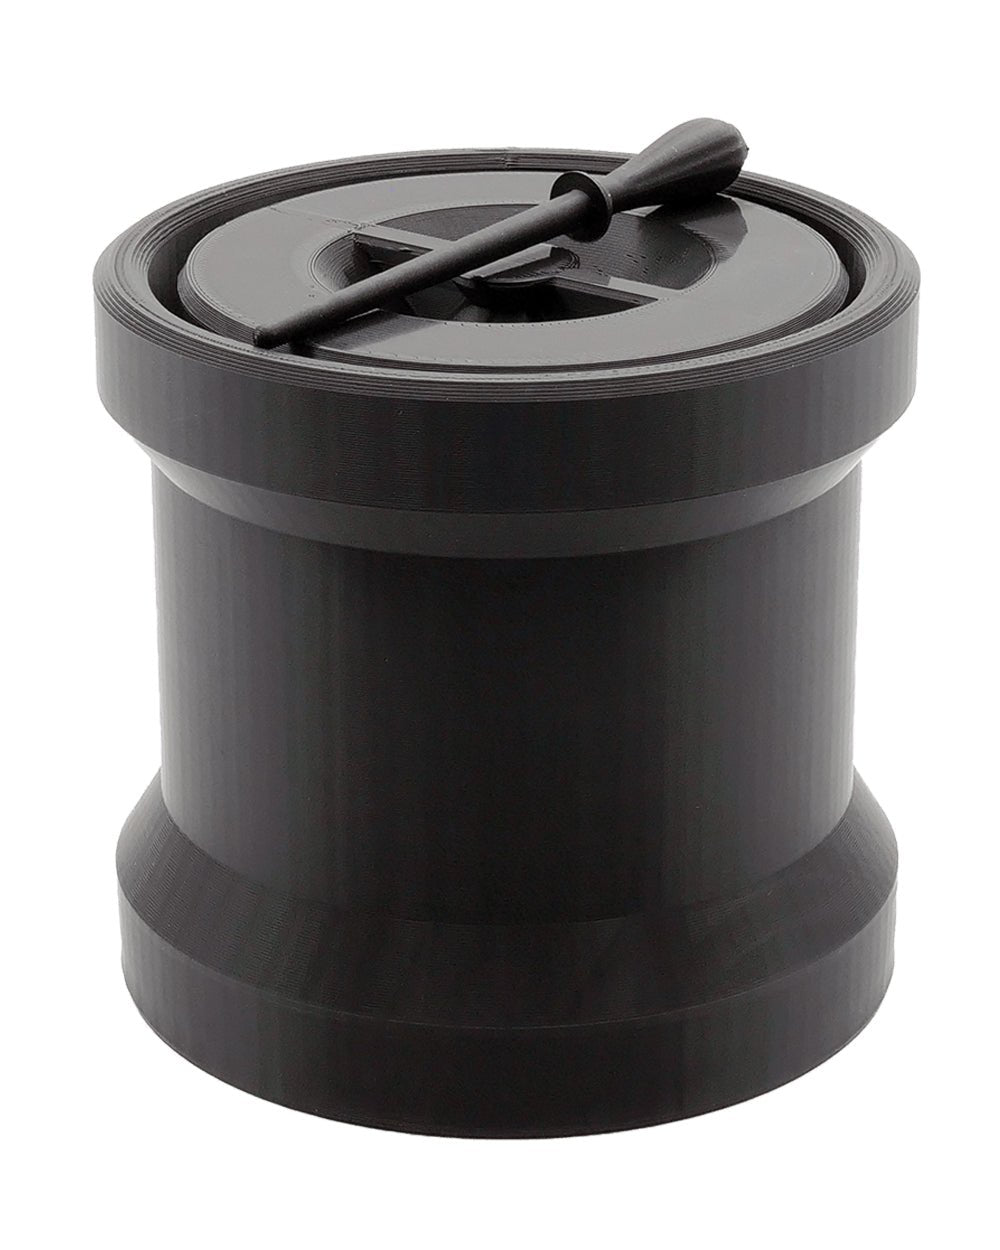 HUMBOLDT | Black Pre-Rolled Cones Filling Machine Starter Kit 98mm | Fill 55 Cones Per Run - 2